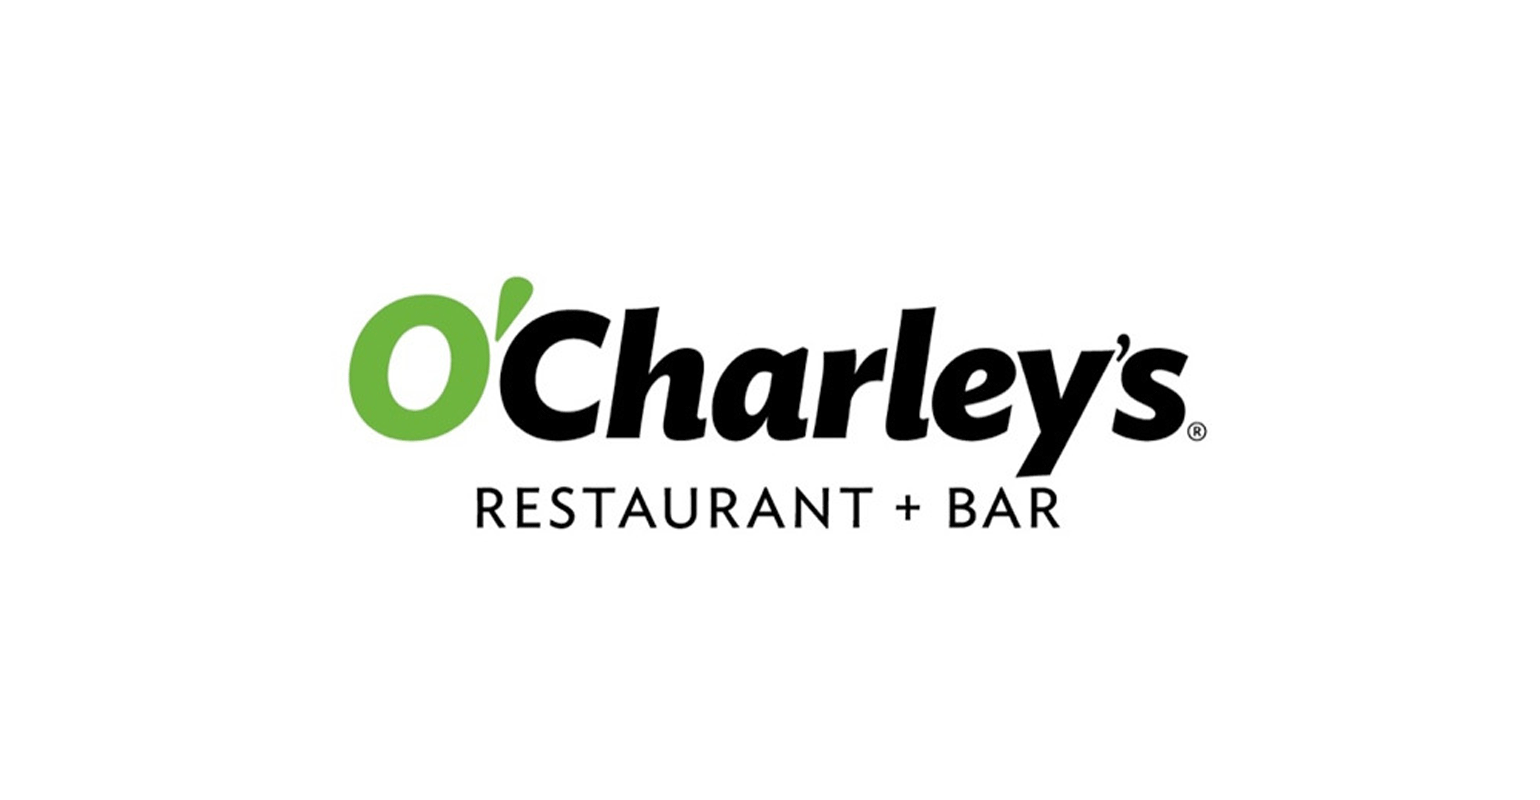 o'charley's dining room